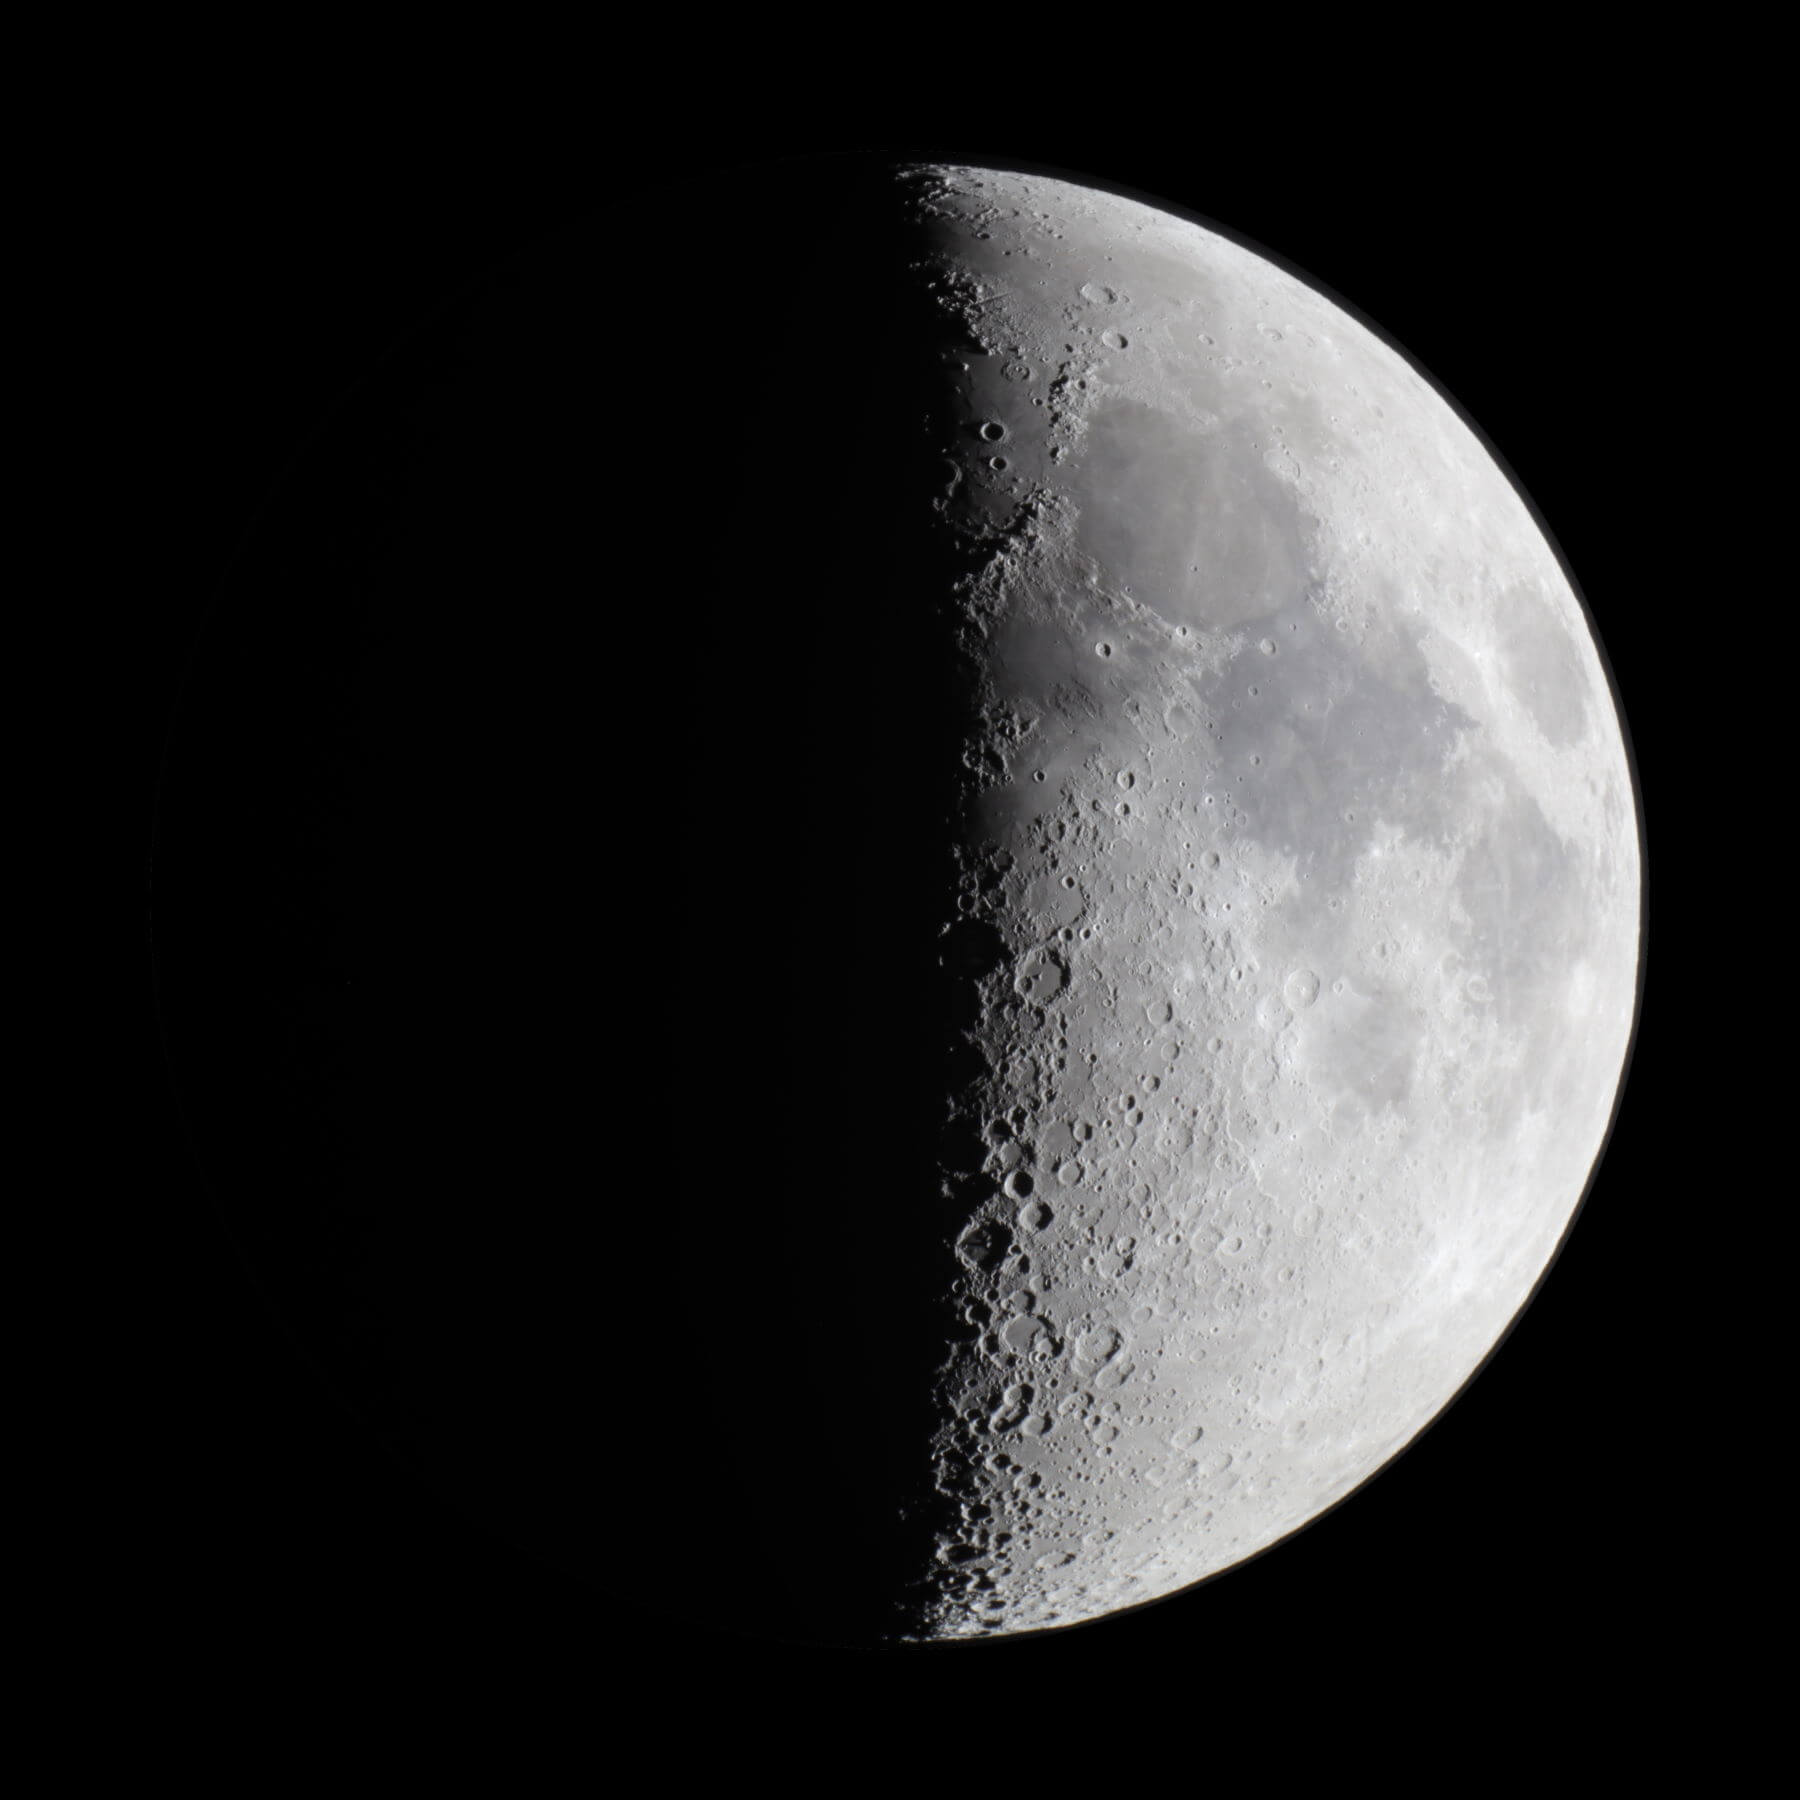 Waxing crescent Moon, 45% illumination